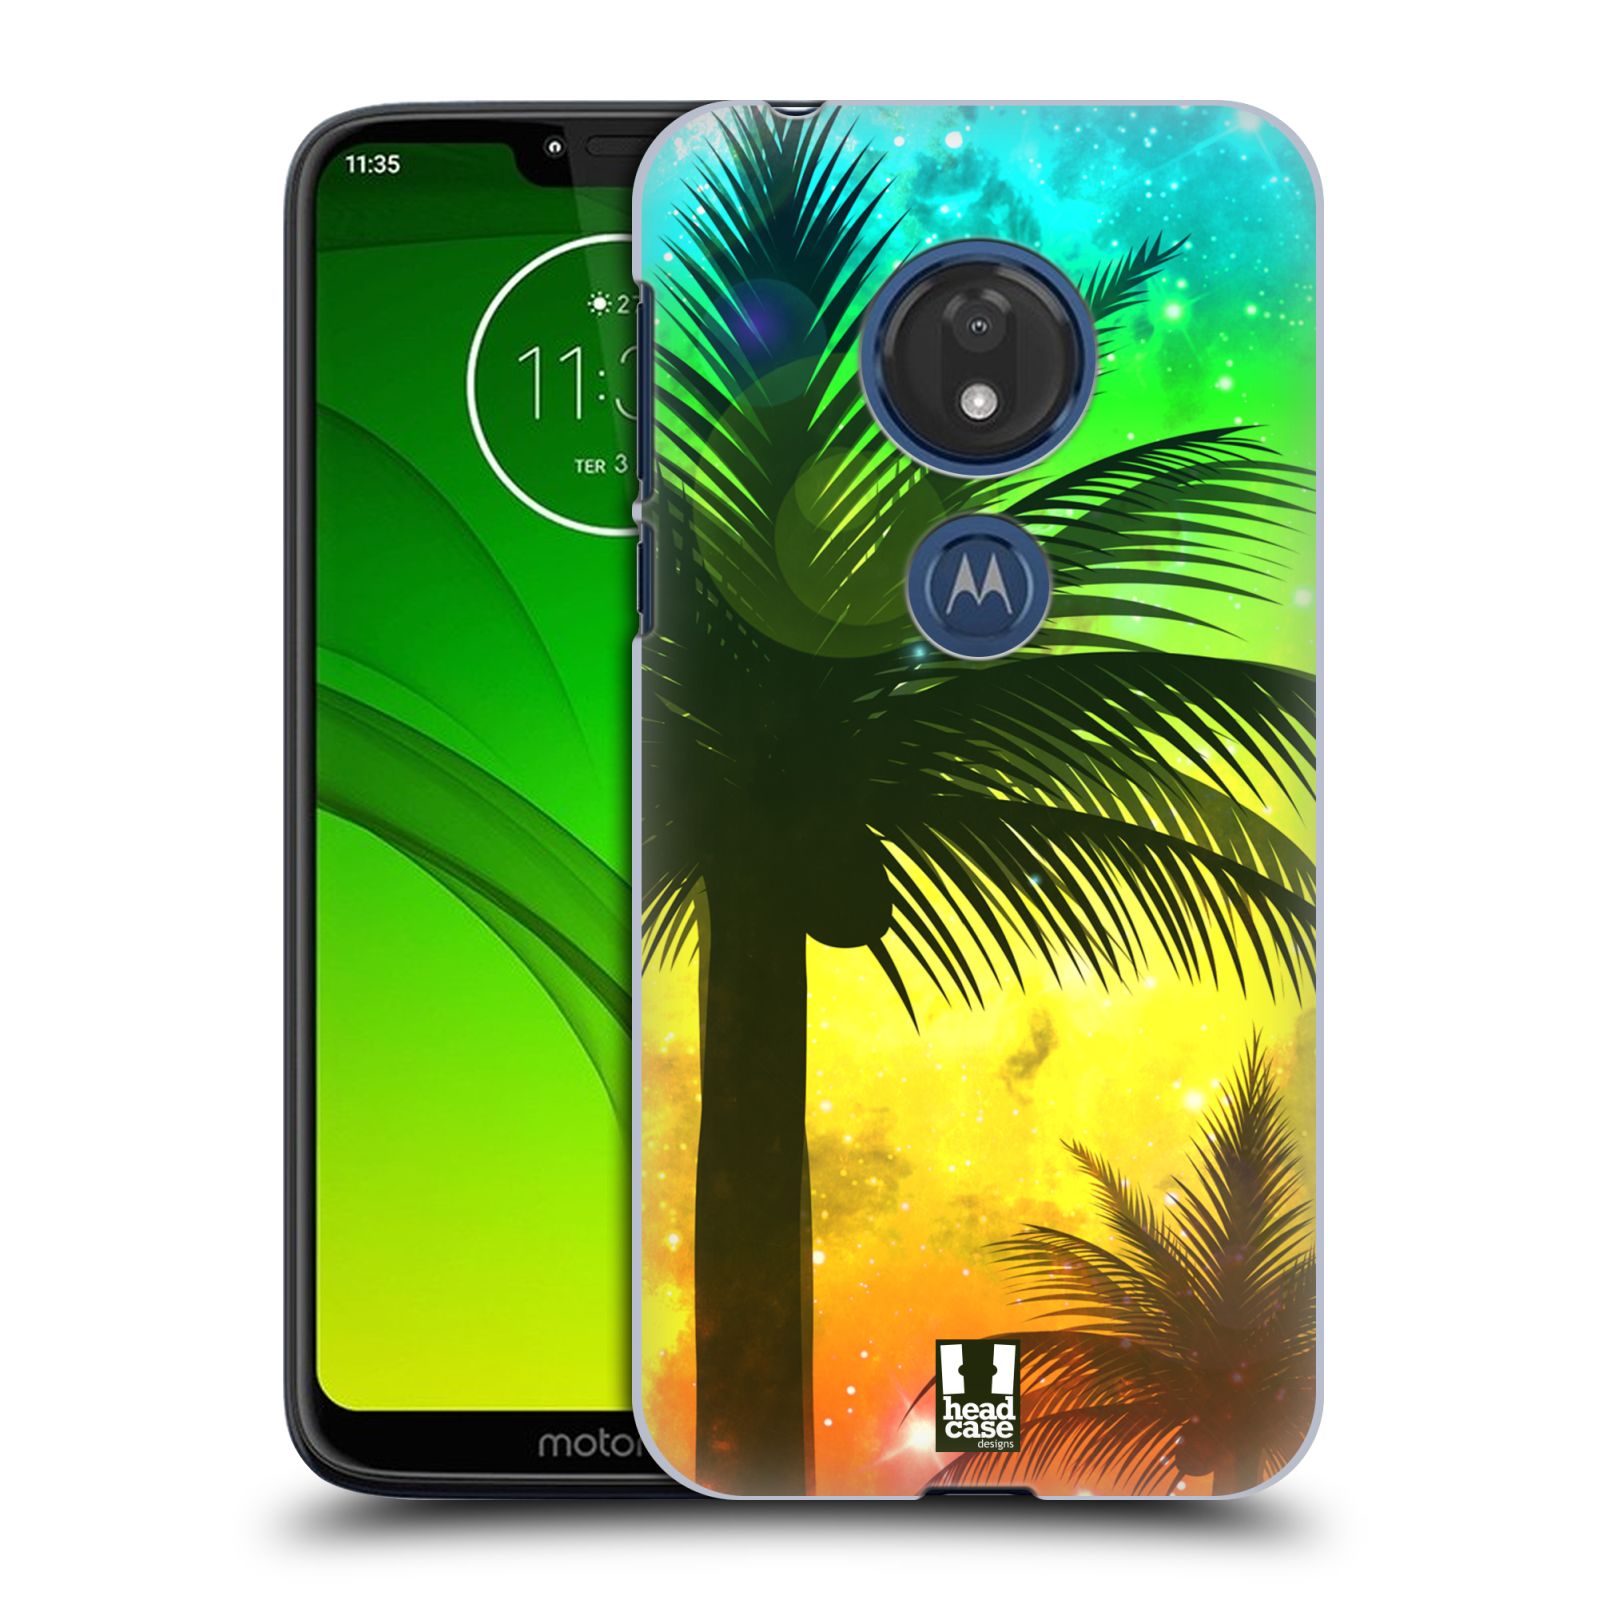 Pouzdro na mobil Motorola Moto G7 Play vzor Kreslený motiv silueta moře a palmy ZELENÁ A ORANŽOVÁ